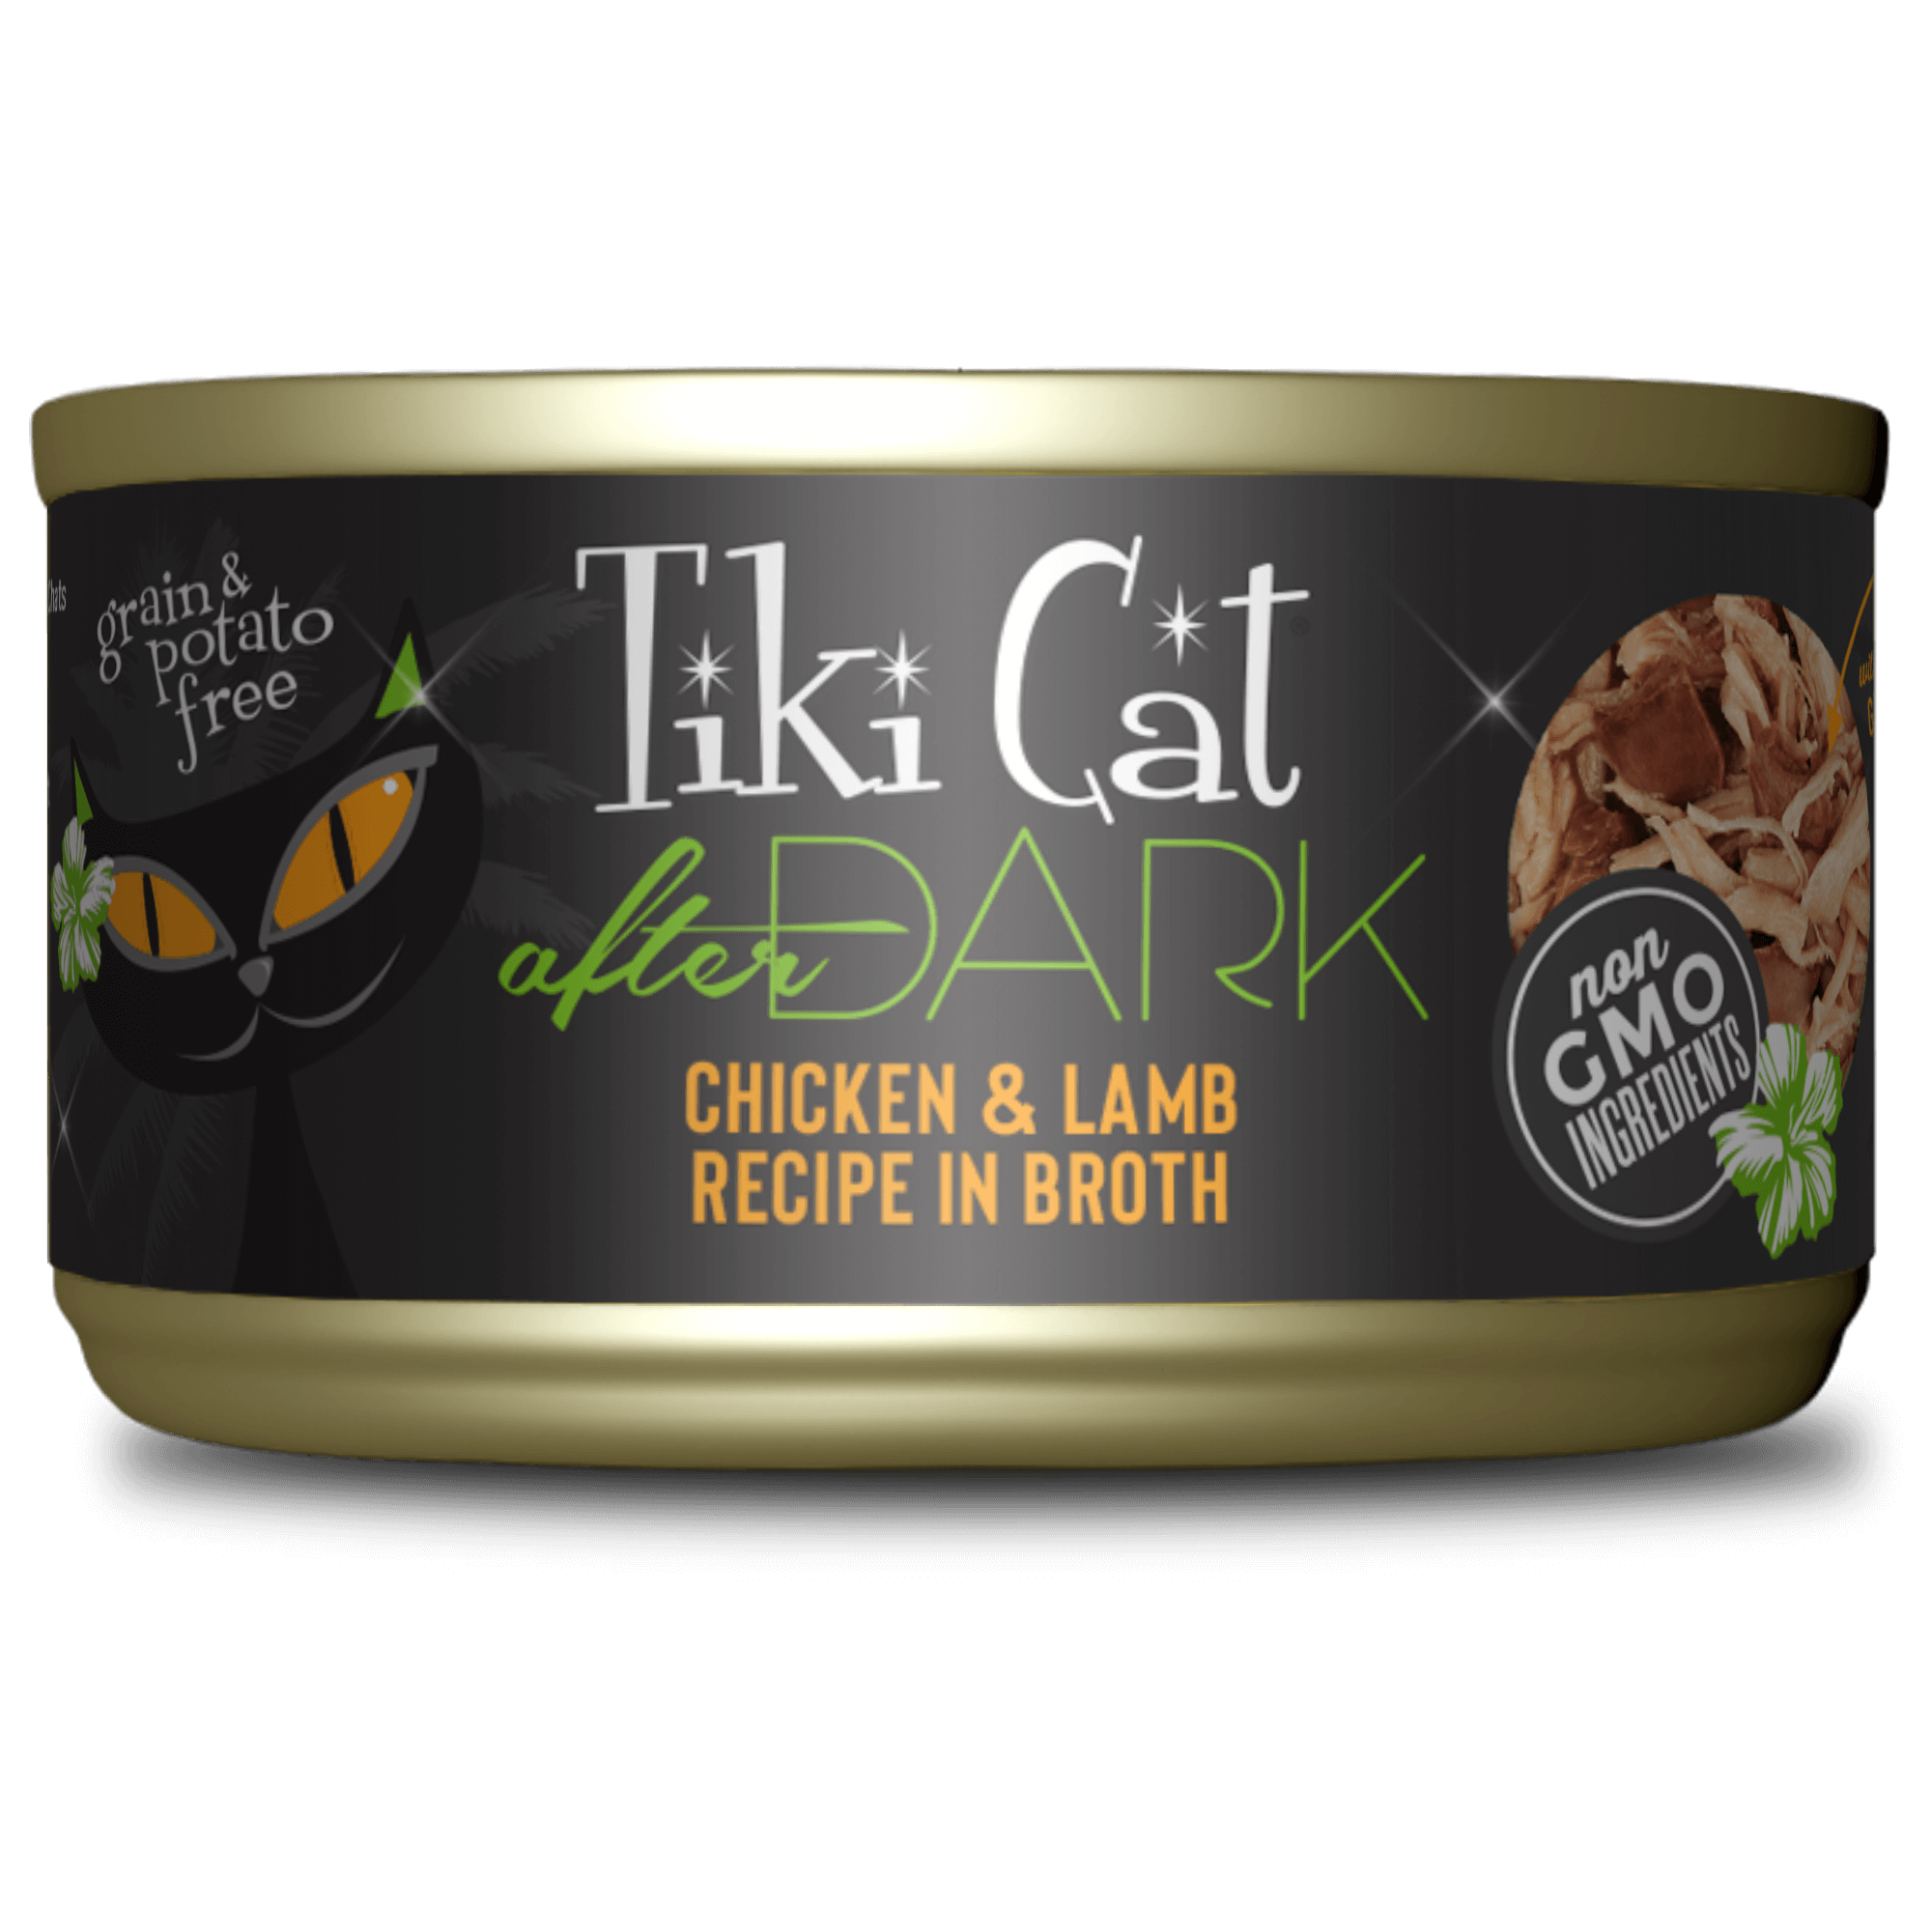 Tiki Cat - After Dark - Chicken & Lamb Recipe in Broth for Cats